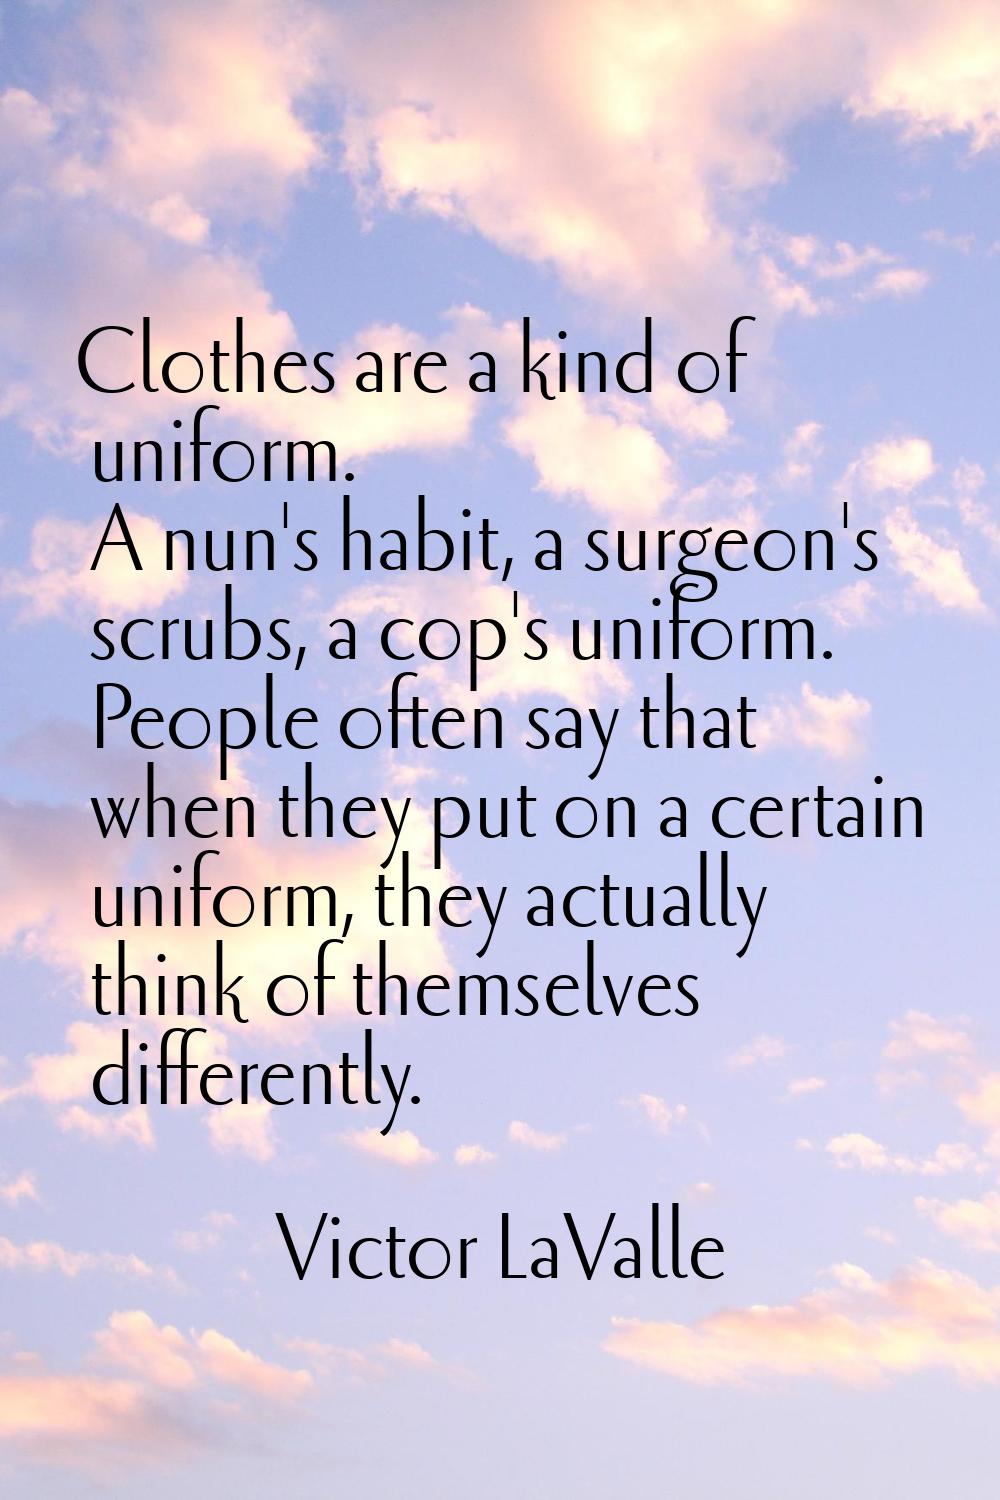 Clothes are a kind of uniform. A nun's habit, a surgeon's scrubs, a cop's uniform. People often say